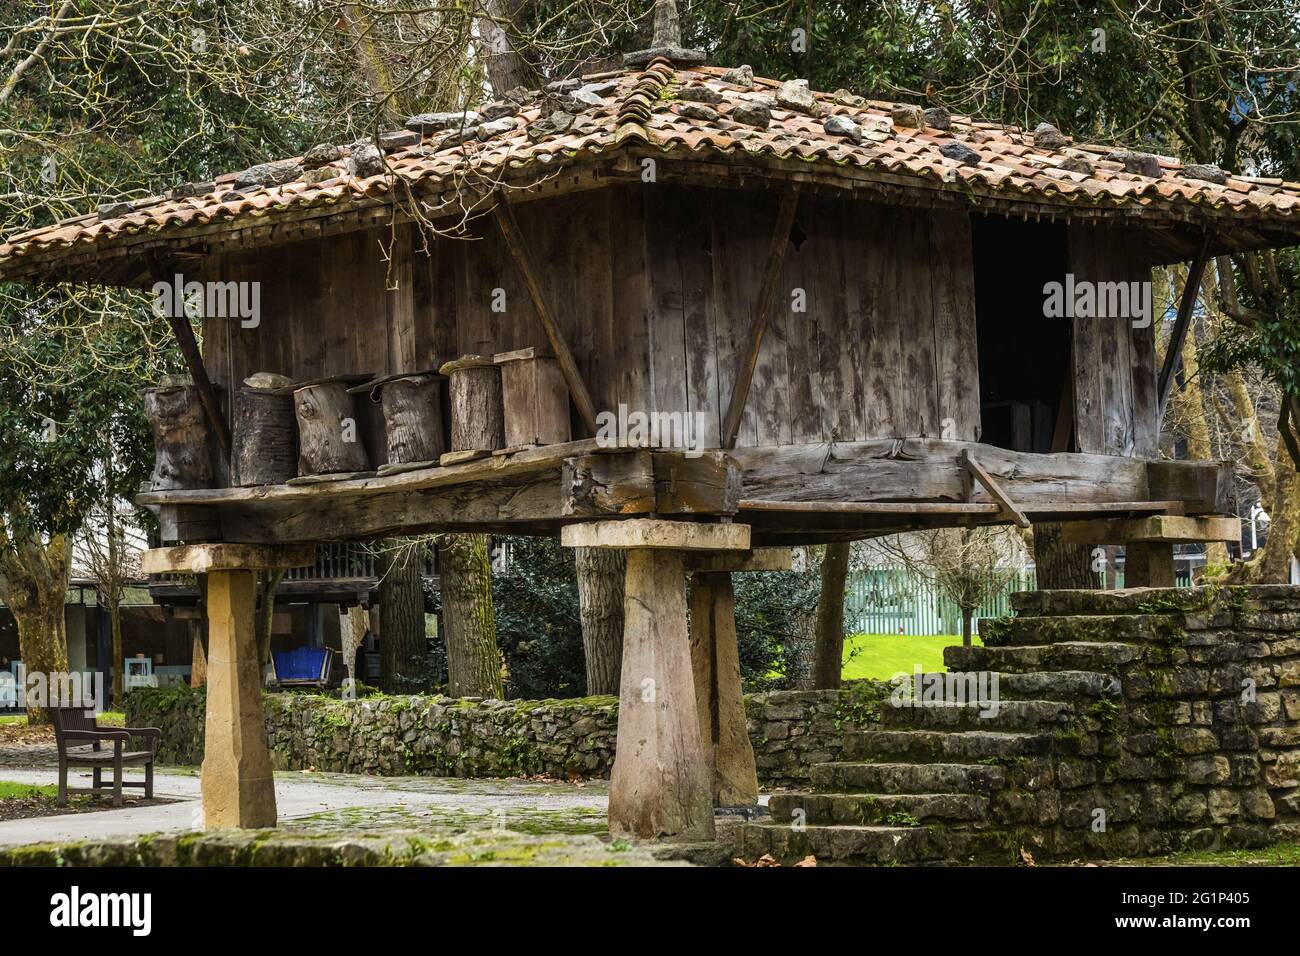 Spain, Asturias, Gijon, museum of the asturian peoples, horreos and paneras, traditional granaries on stilts Stock Photo